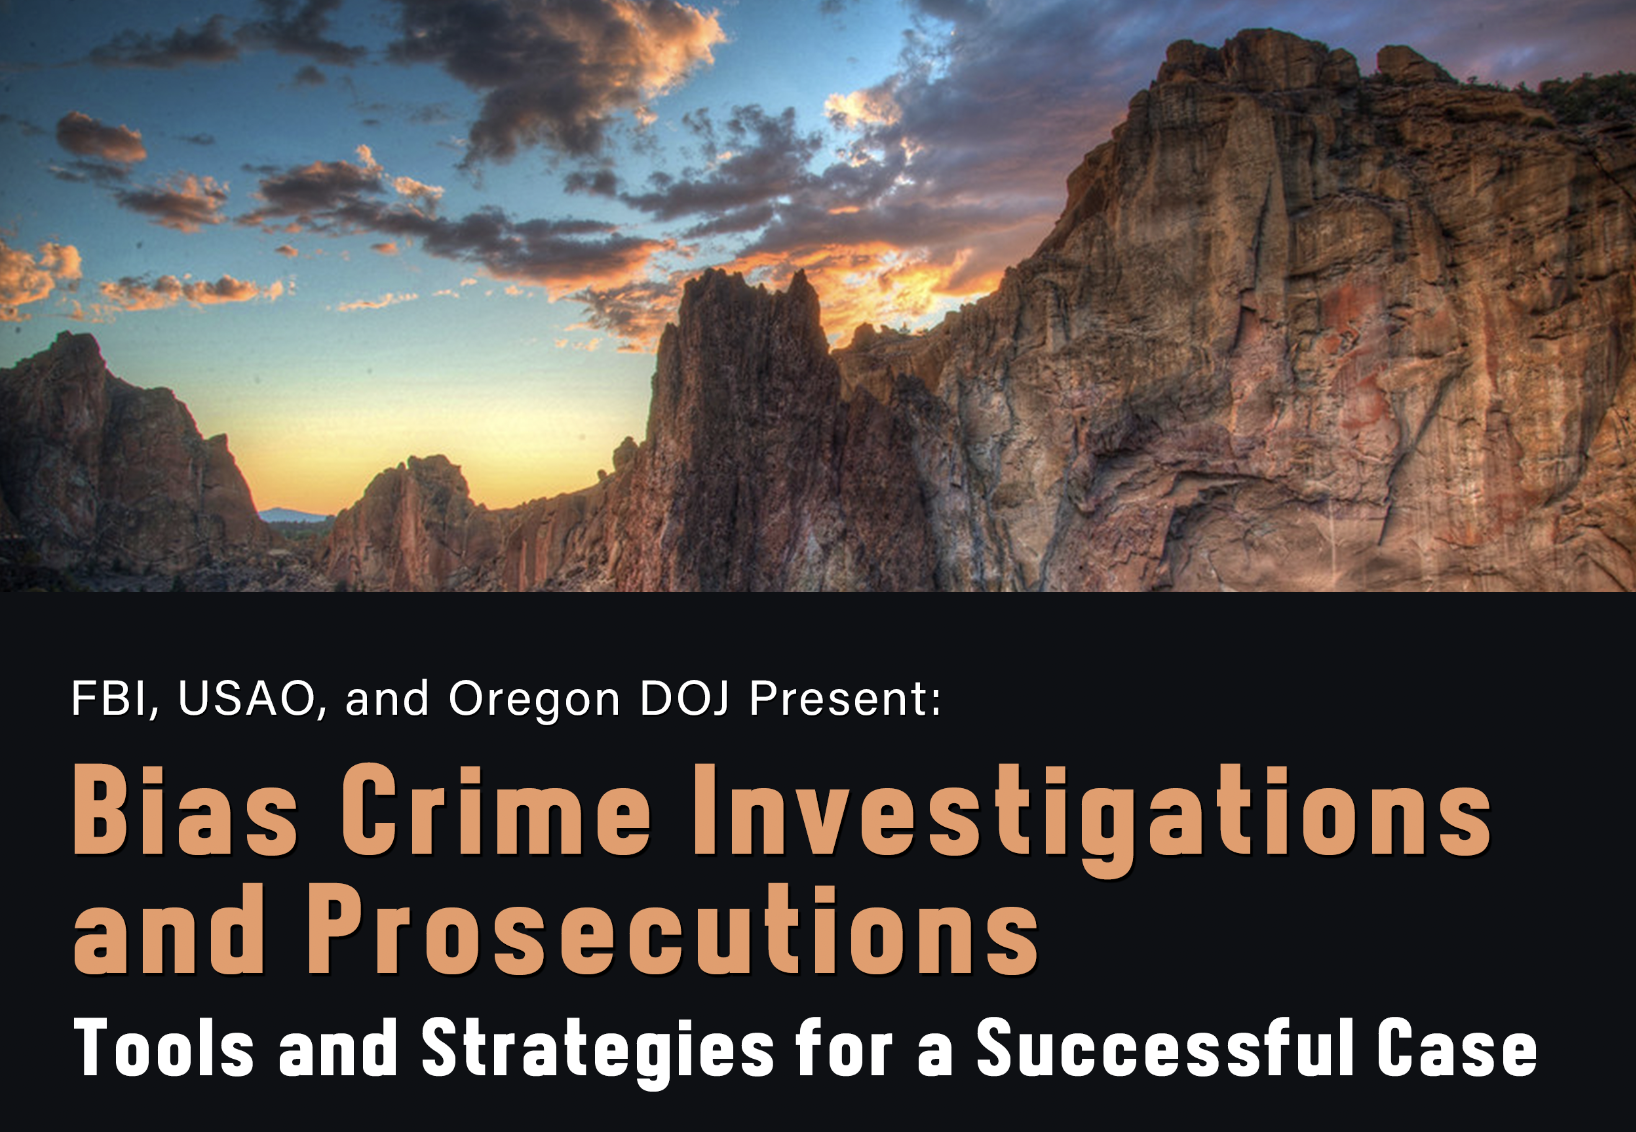 FBI, USAO, USDOJ, and Oregon DOJ Present: Bias Crime Investigations and Prosecutions, Tools and Strategies for a Successful Case